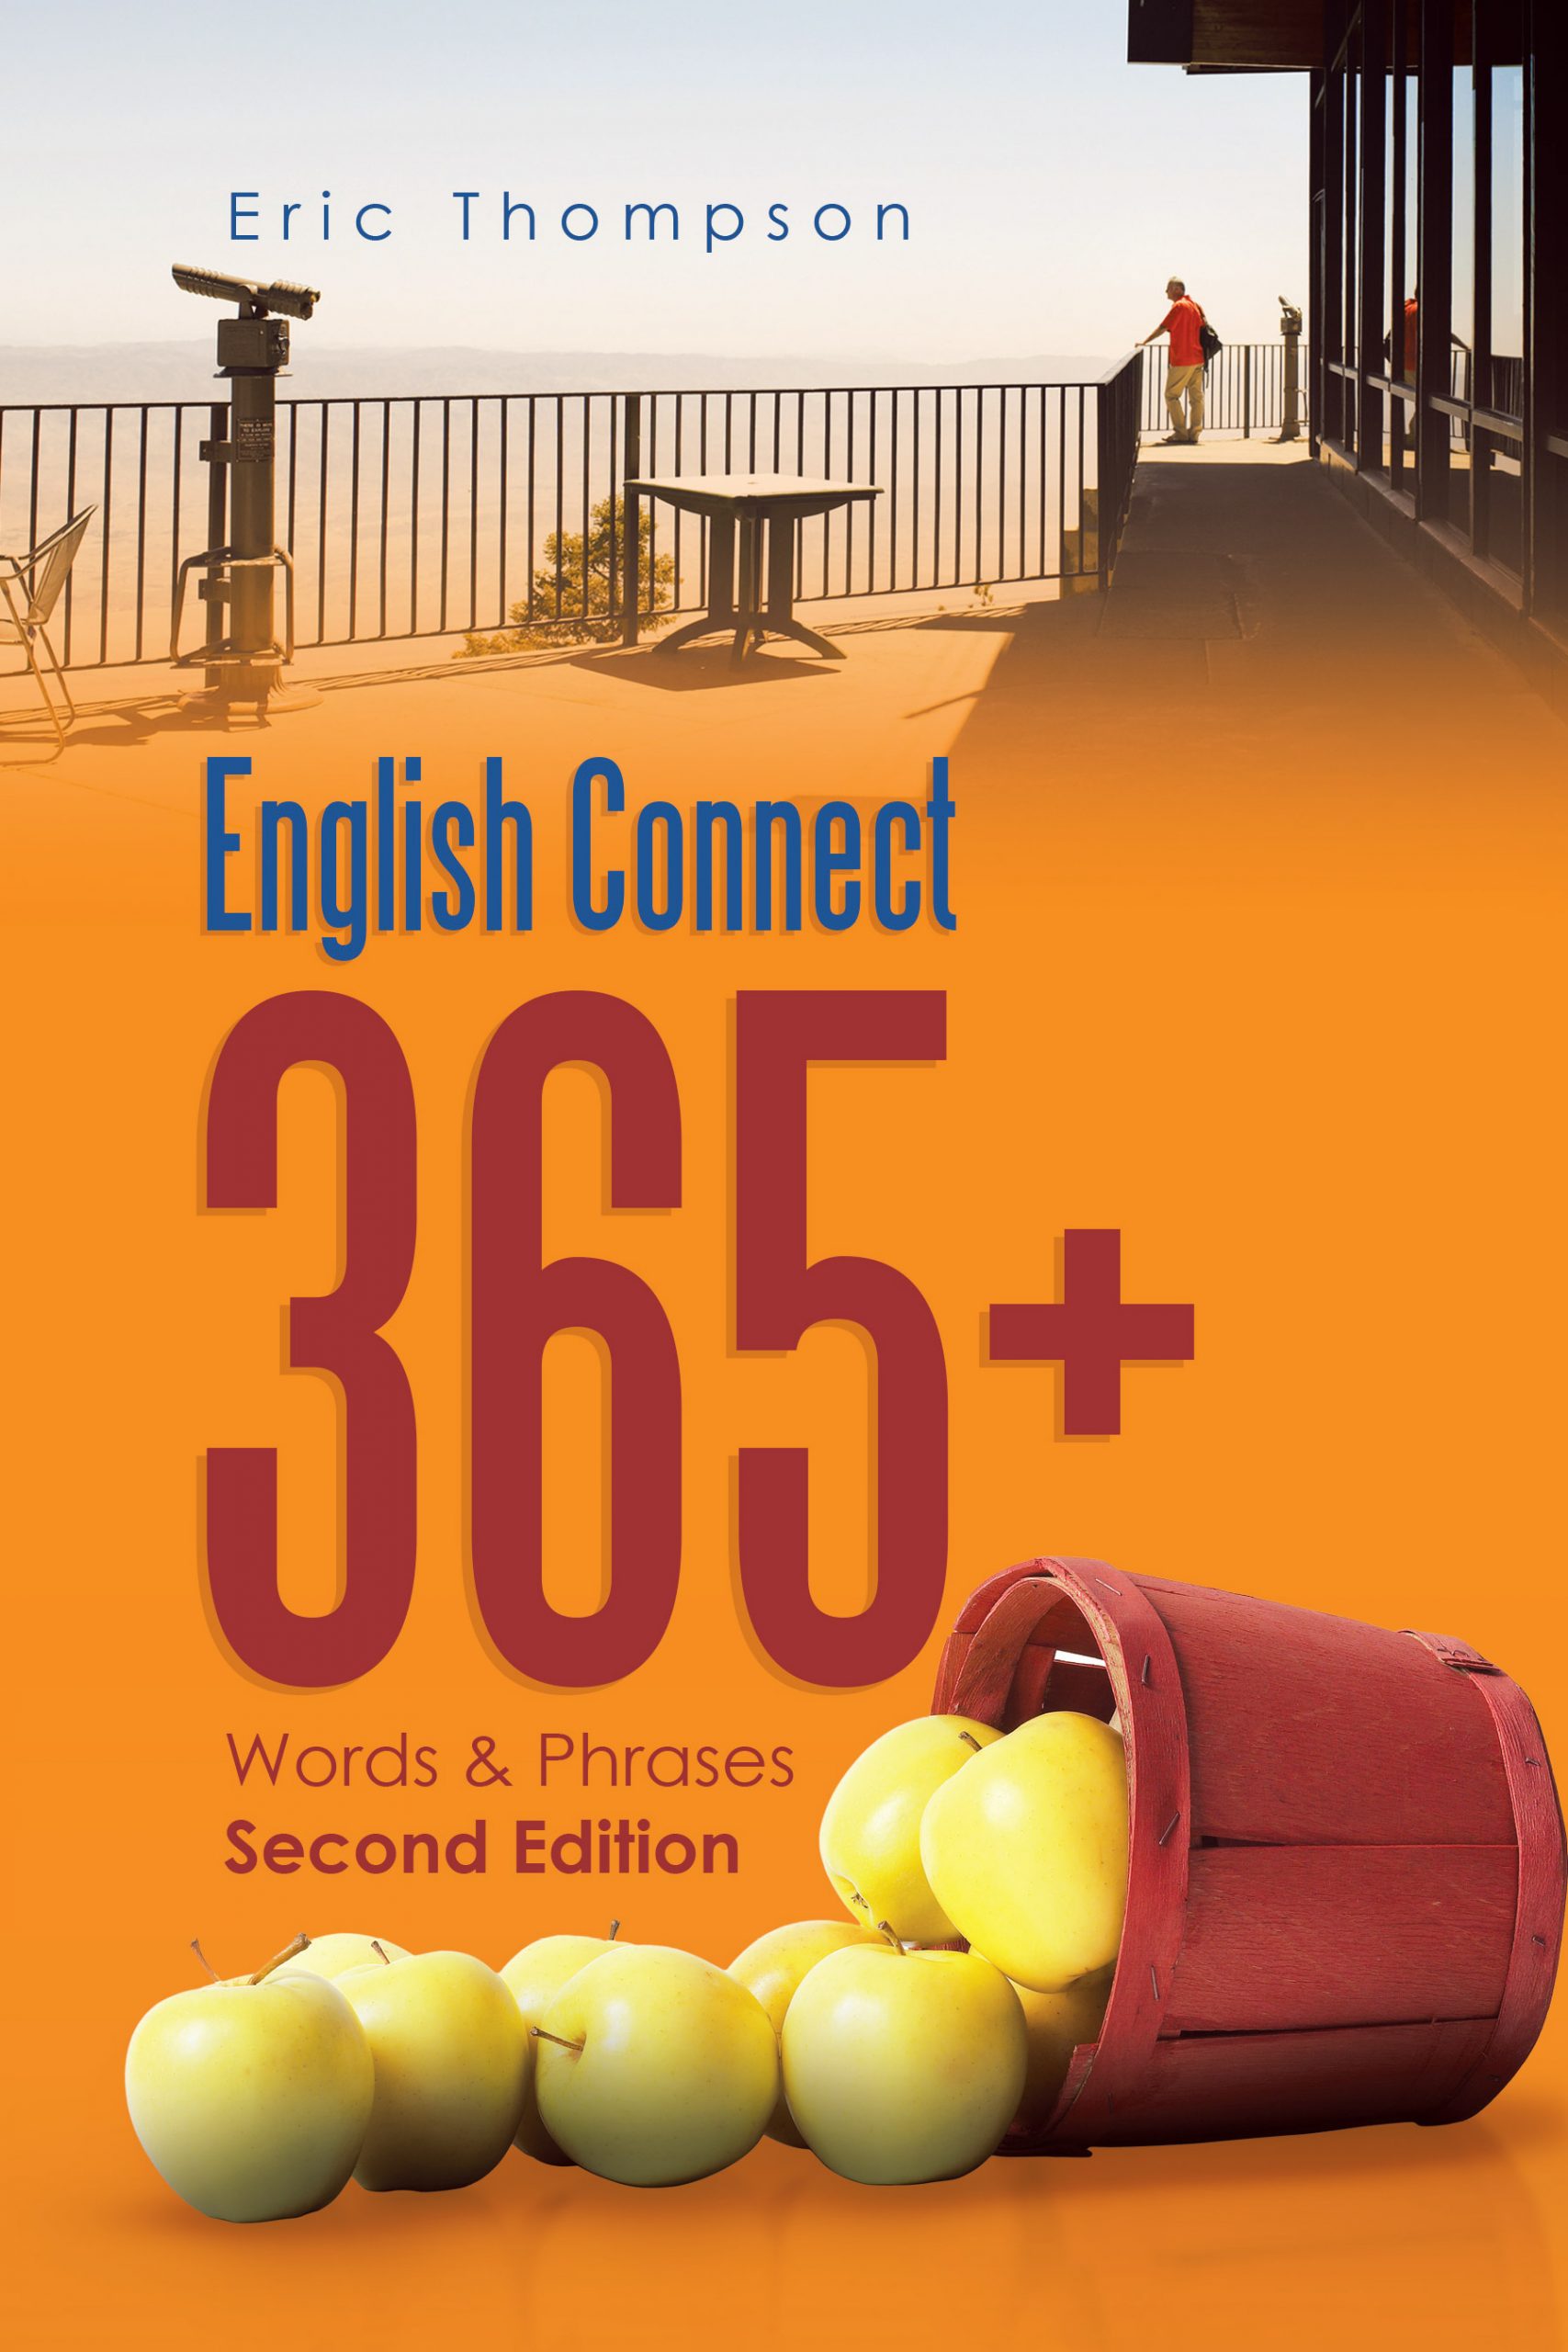 Connect english. Thompson English.